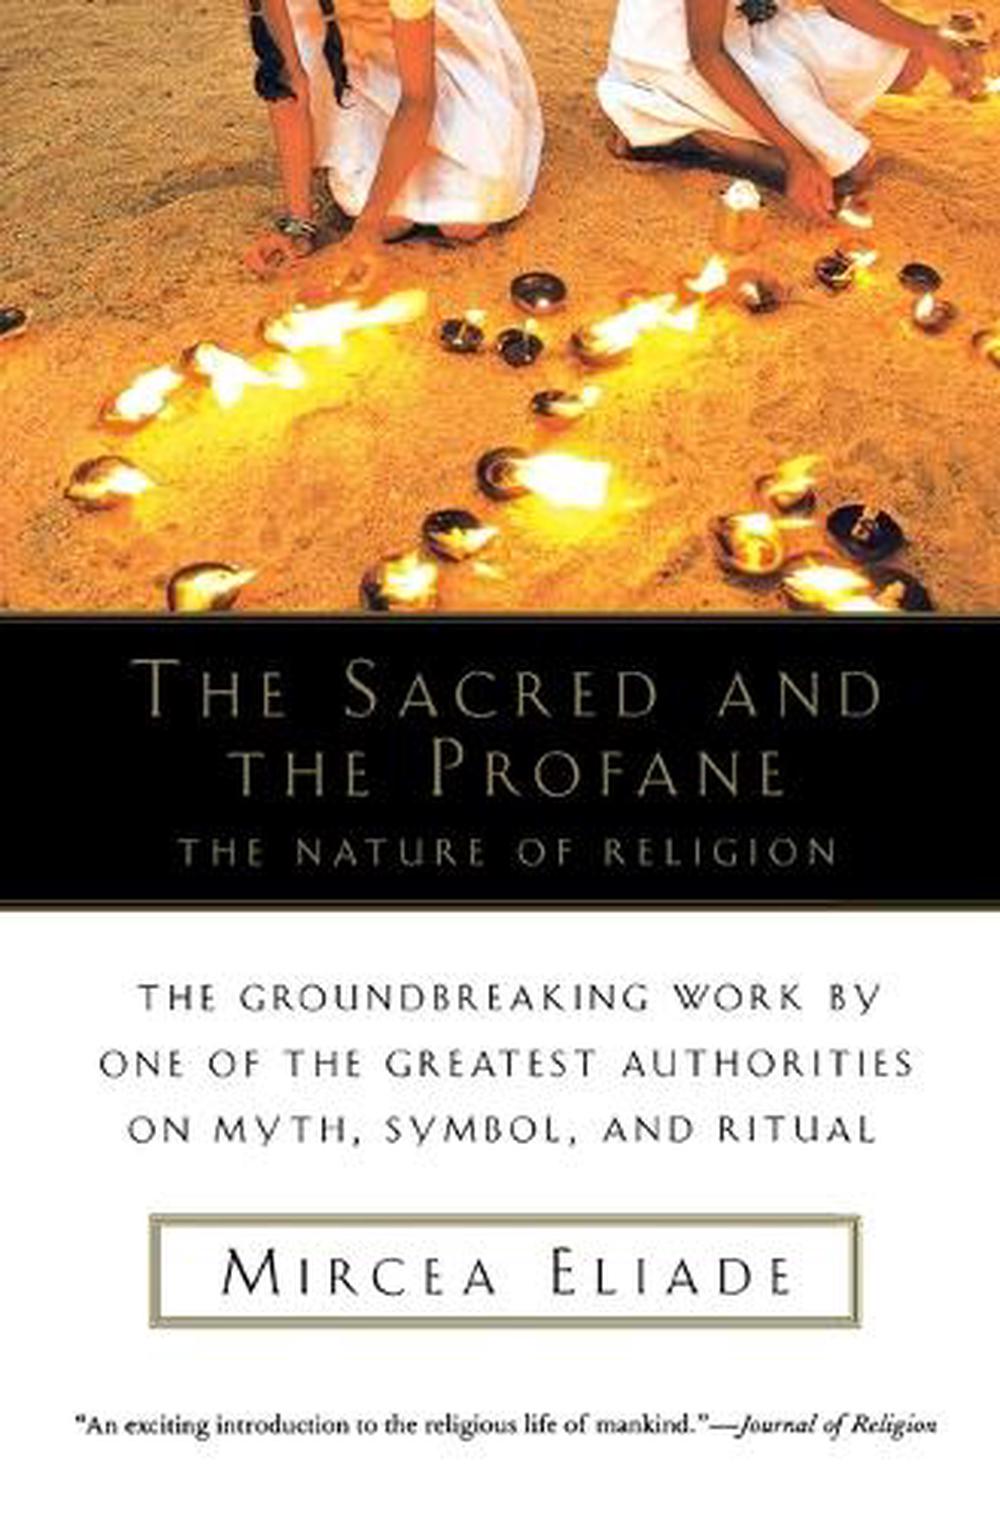 The Sacred and Profane by Mircea Eliade, Paperback, 9780156792011 Buy